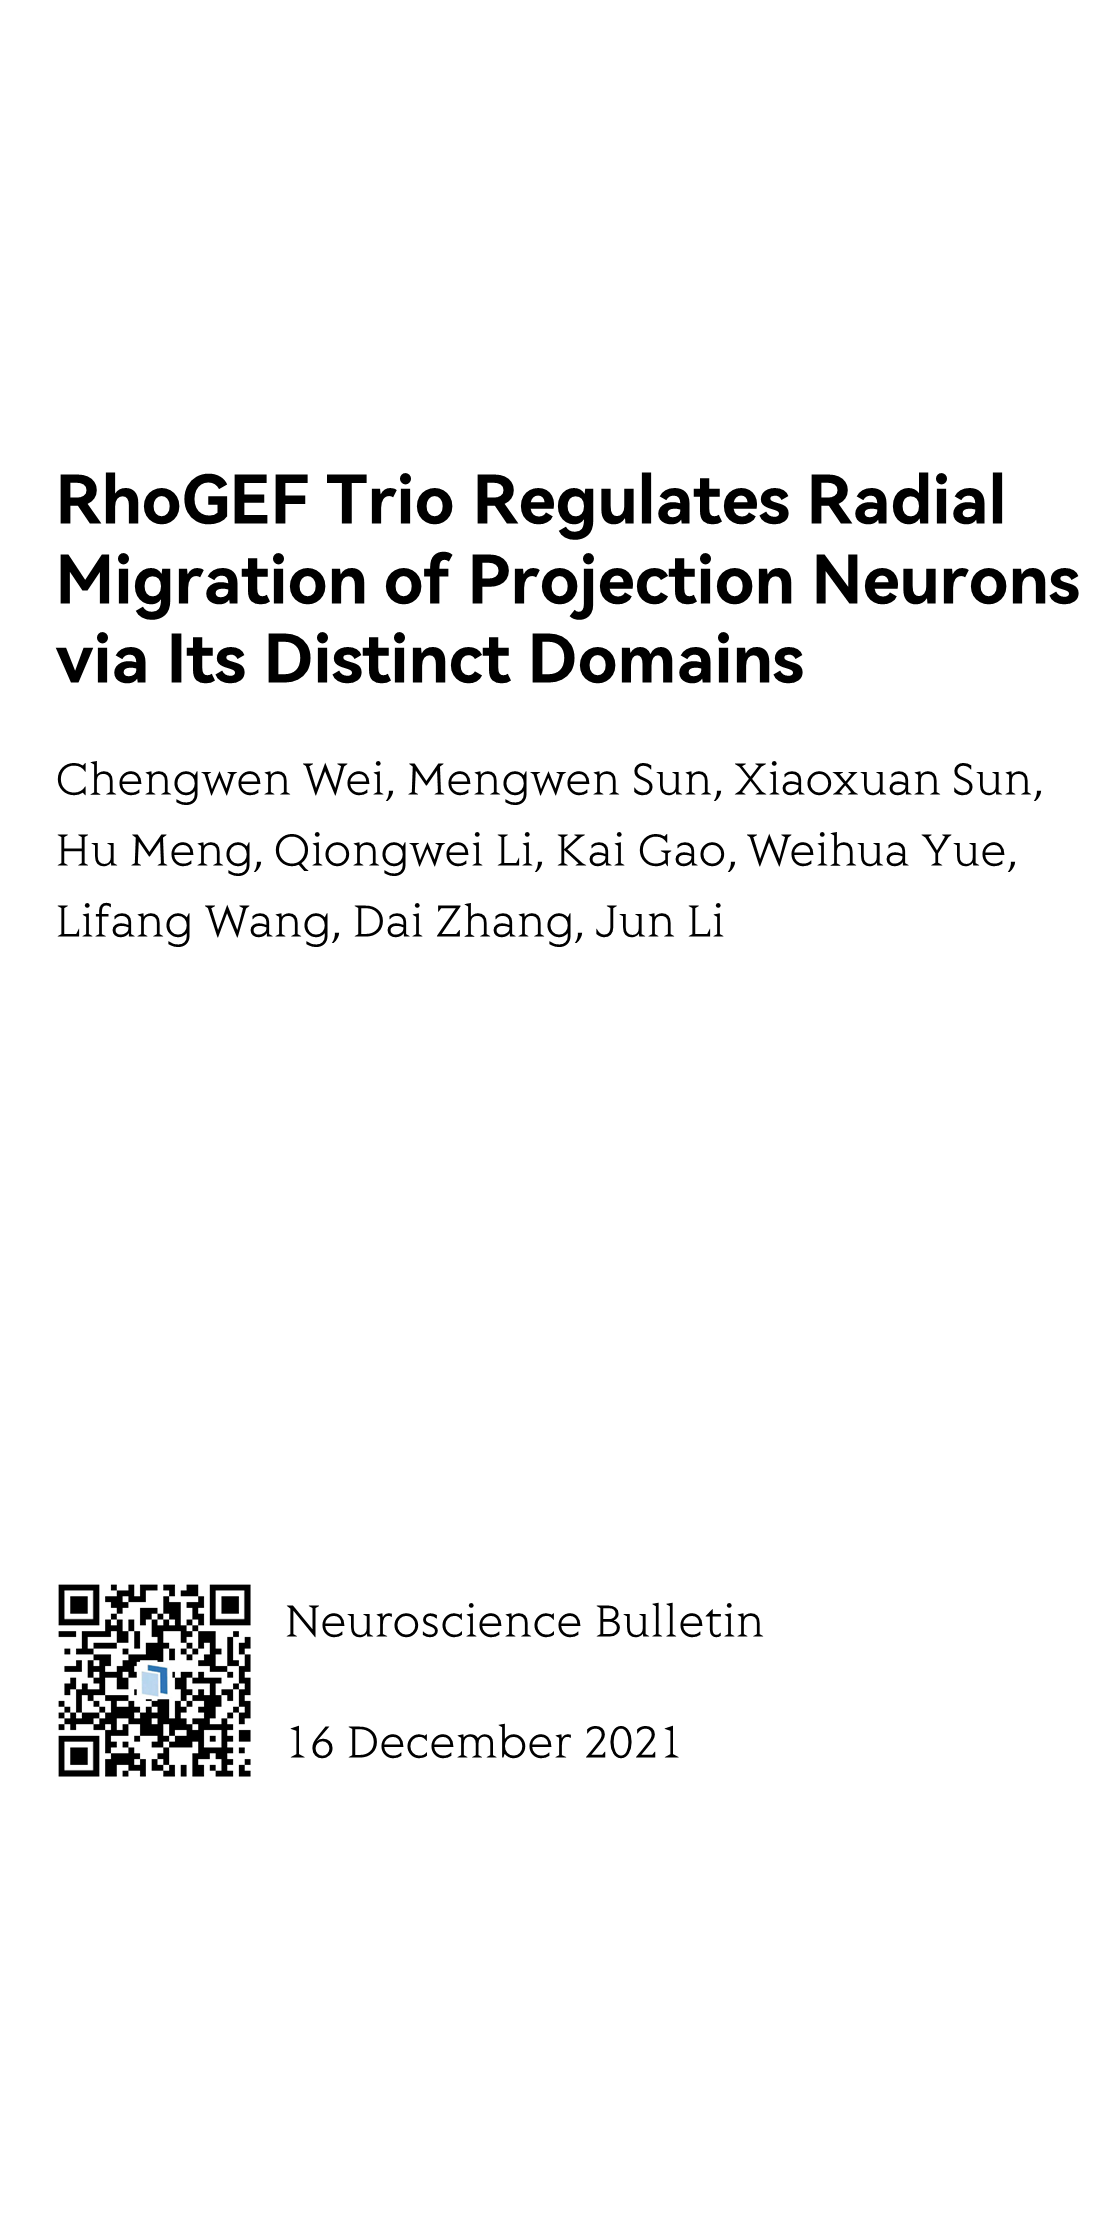 RhoGEF Trio Regulates Radial Migration of Projection Neurons via Its Distinct Domains_1